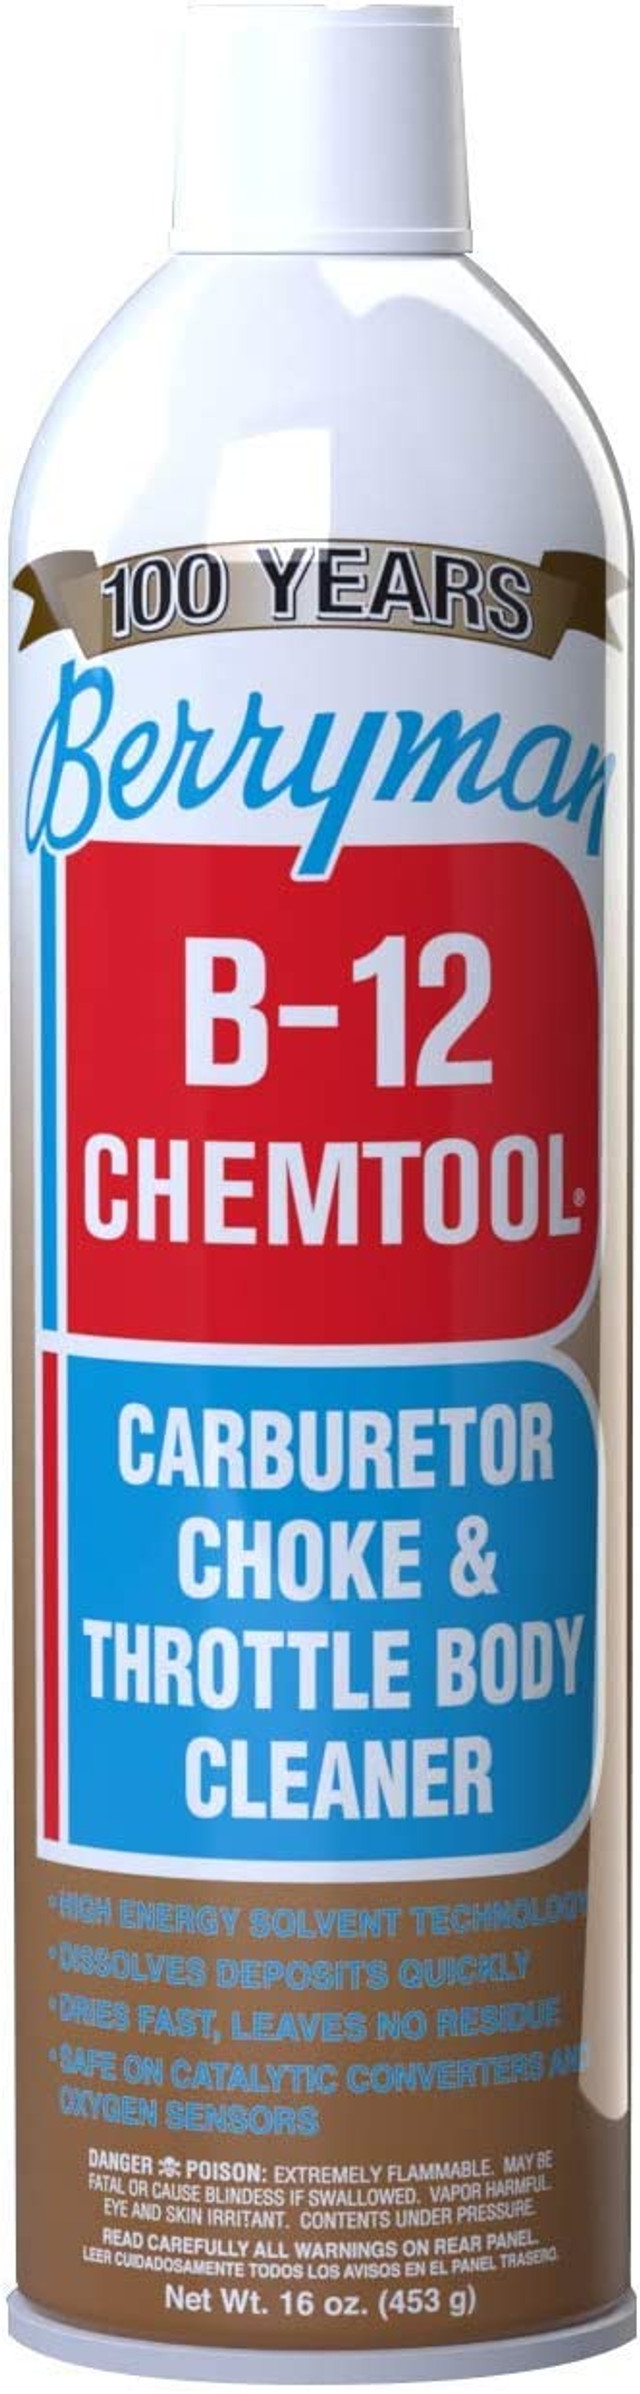 BERRYMAN B-12 CHEMTOOL CARBURETOR CLEANER (0117)